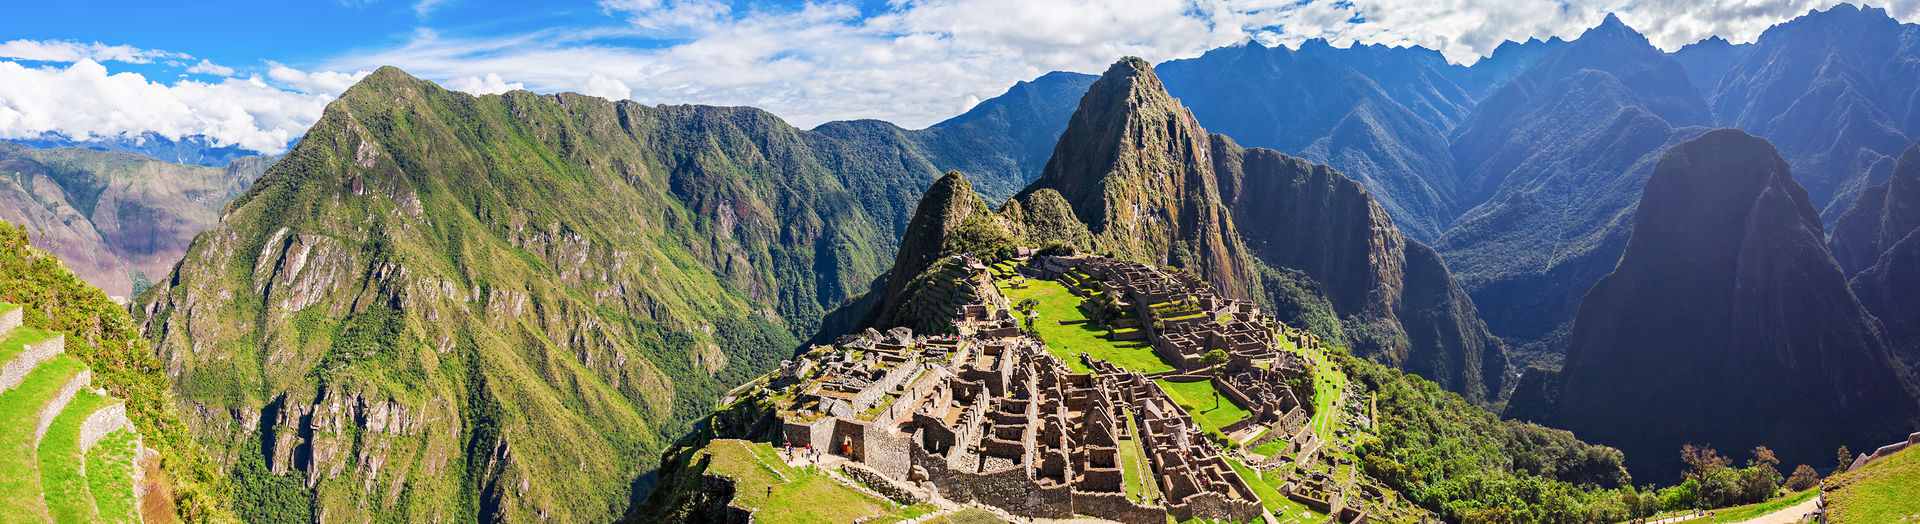 Peru Travel & Holidays | iLuv2Travel & Cruise